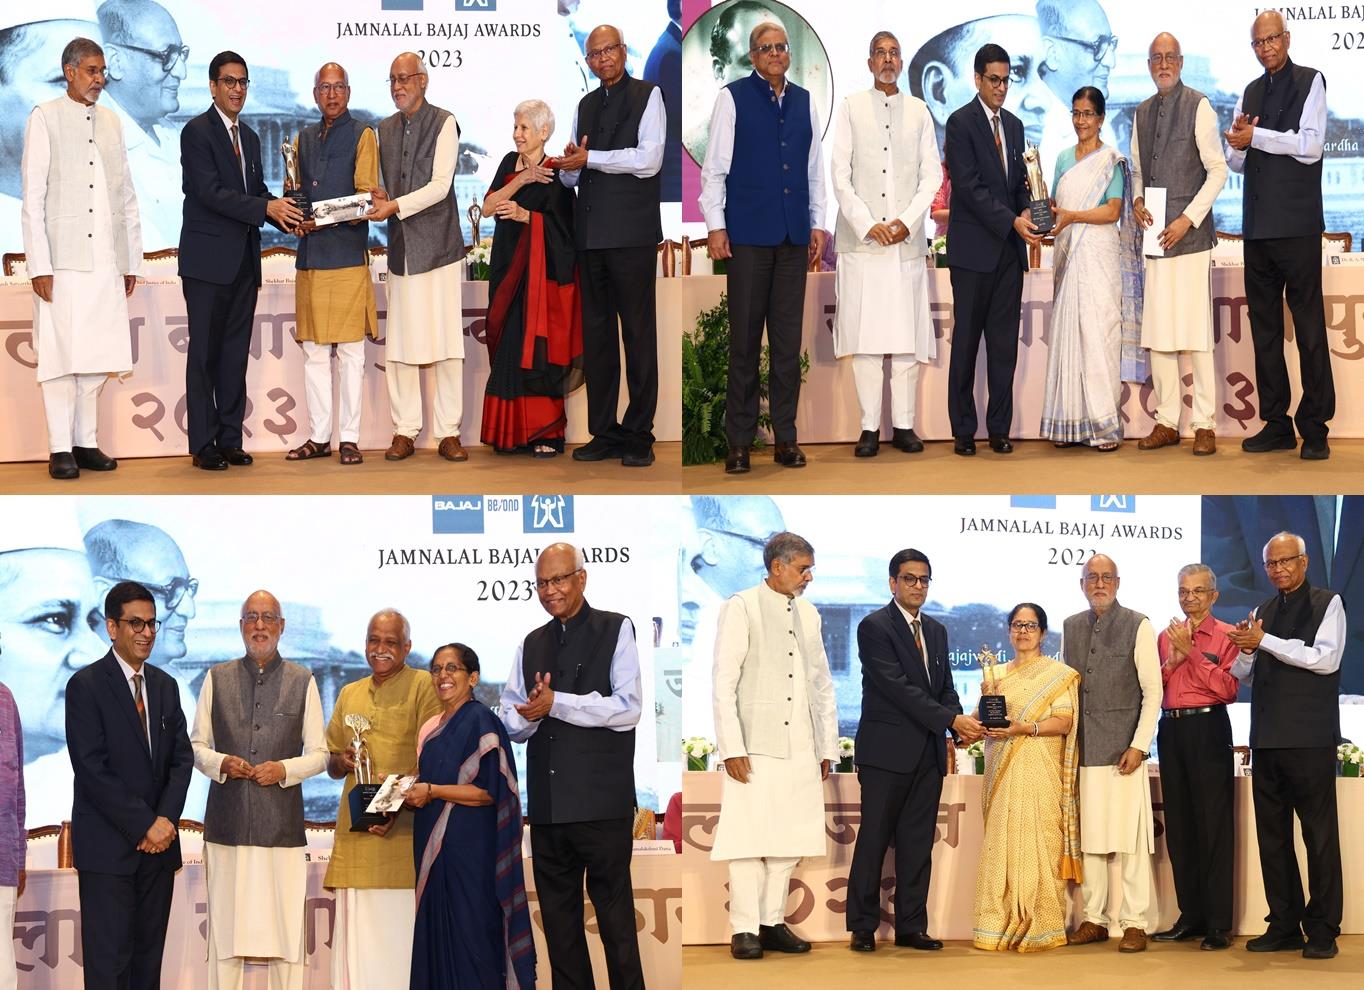 CJI Chandrachud Confers Jamnalal Bajaj Awards On 3 Eminent Indians, 1 Bangladeshi